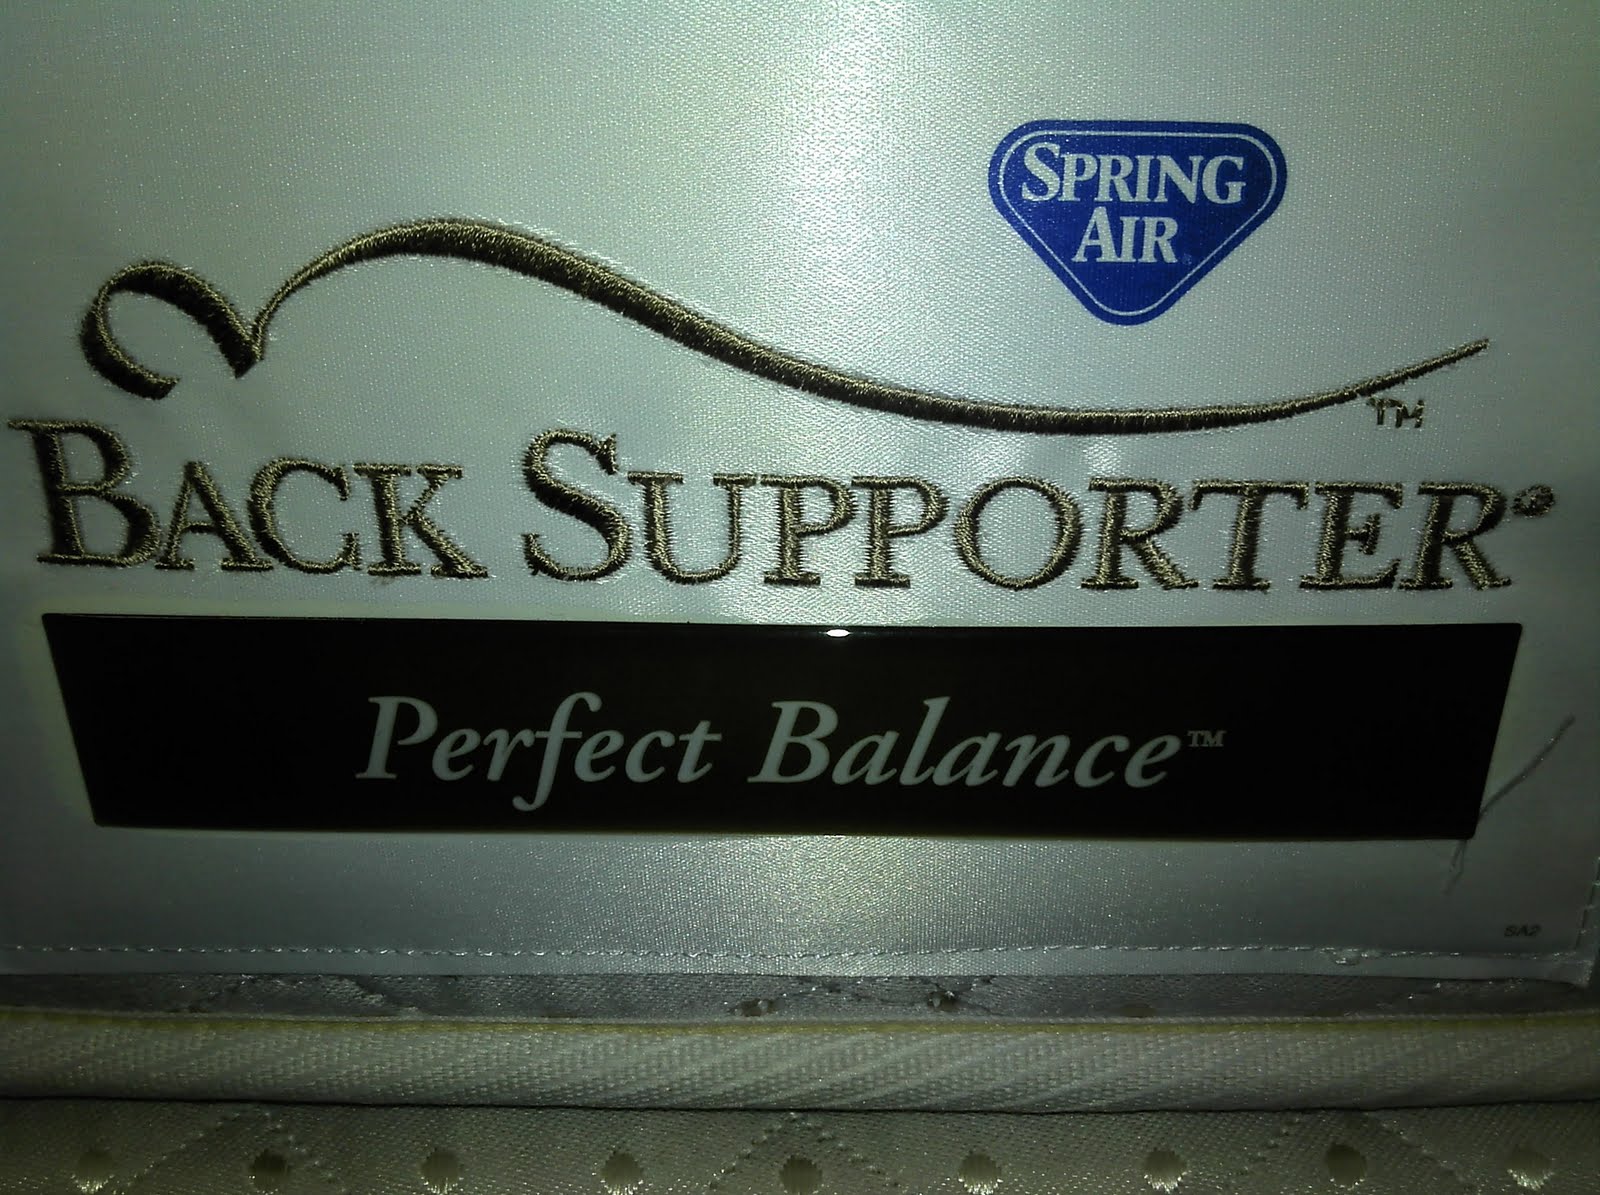 spring air perfect balance aura cf mattress